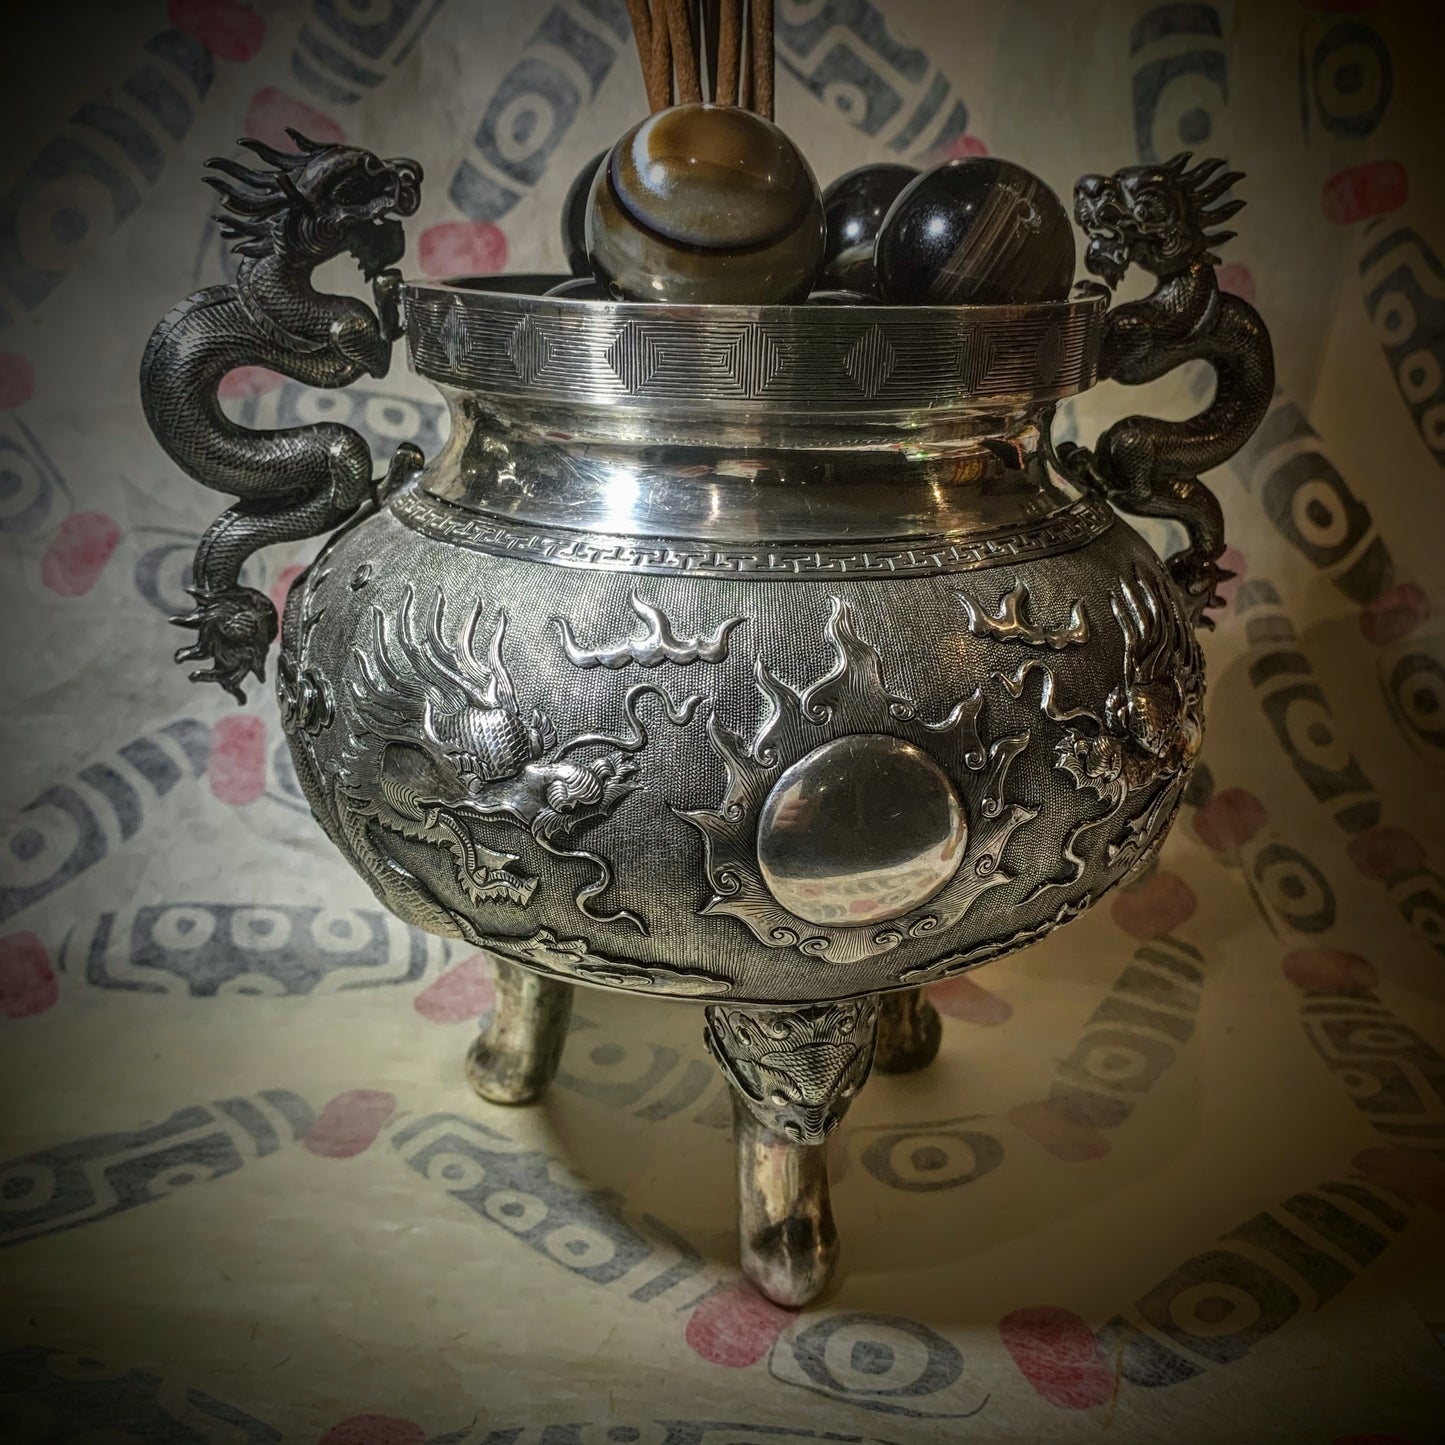 An antique silver censer